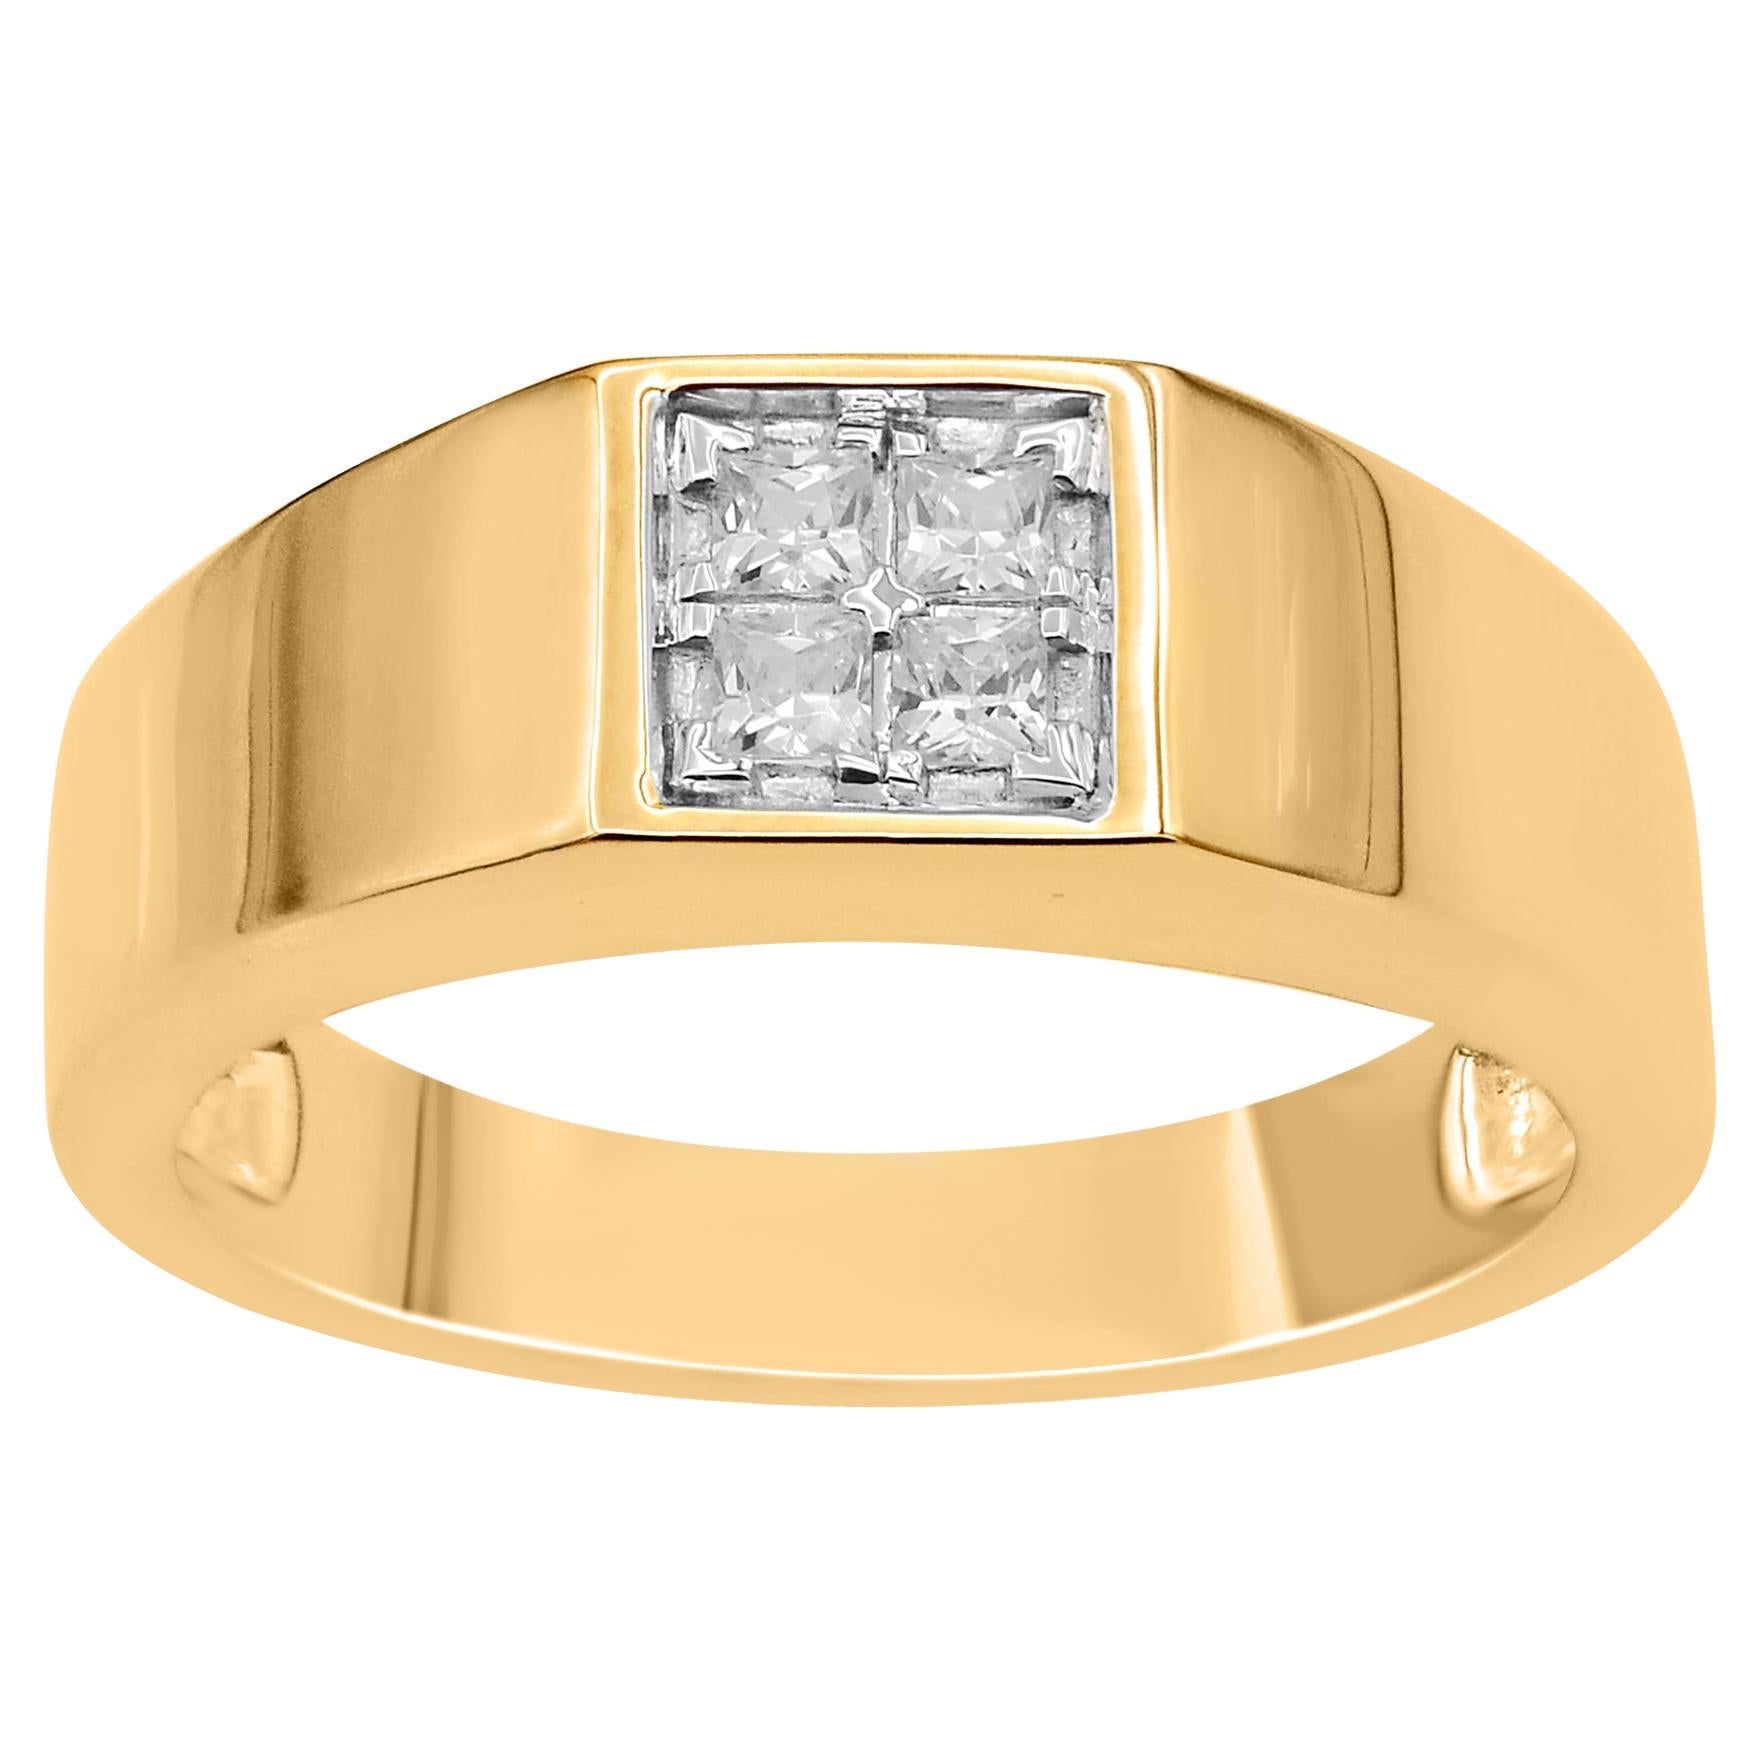 TJD 0.30 Carat Princess Cut Diamond 14KT Yellow Gold Men's Wedding Band Ring For Sale